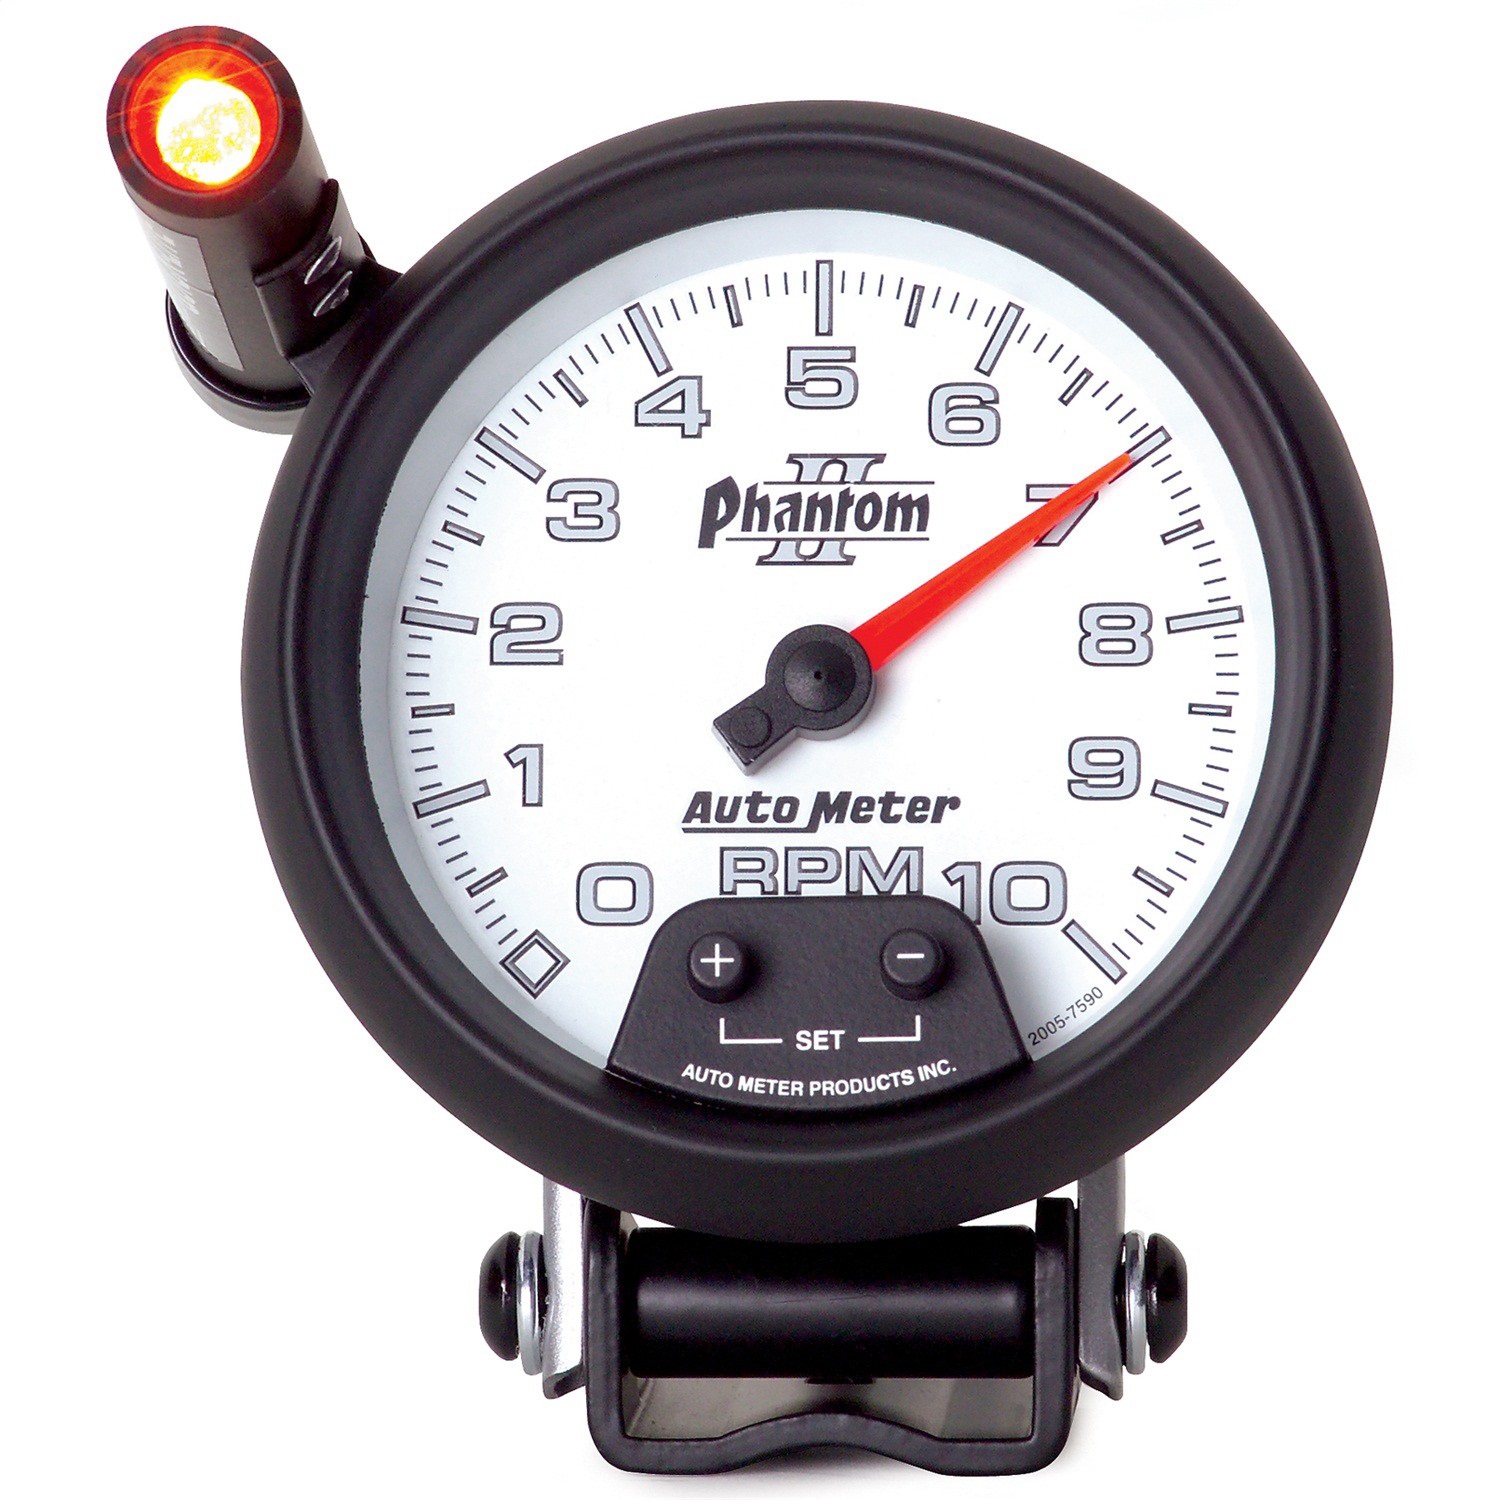 Auto Meter Auto Meter 7590 Phantom II; Tachometer